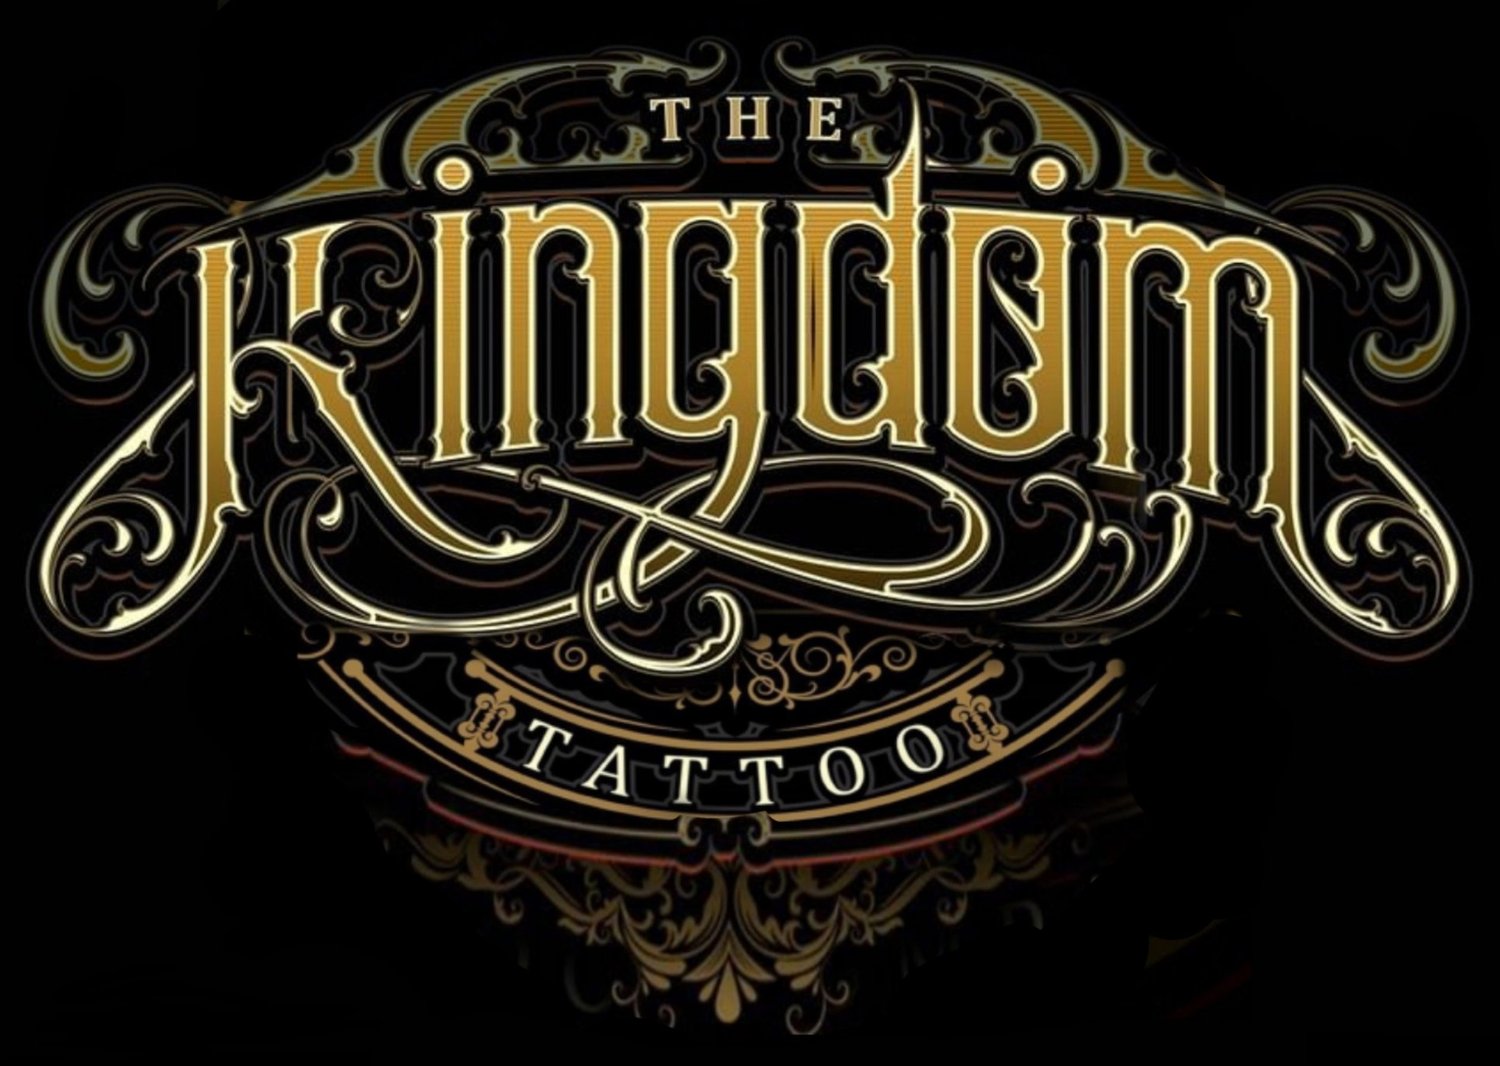 The Kingdom Tattoo Company